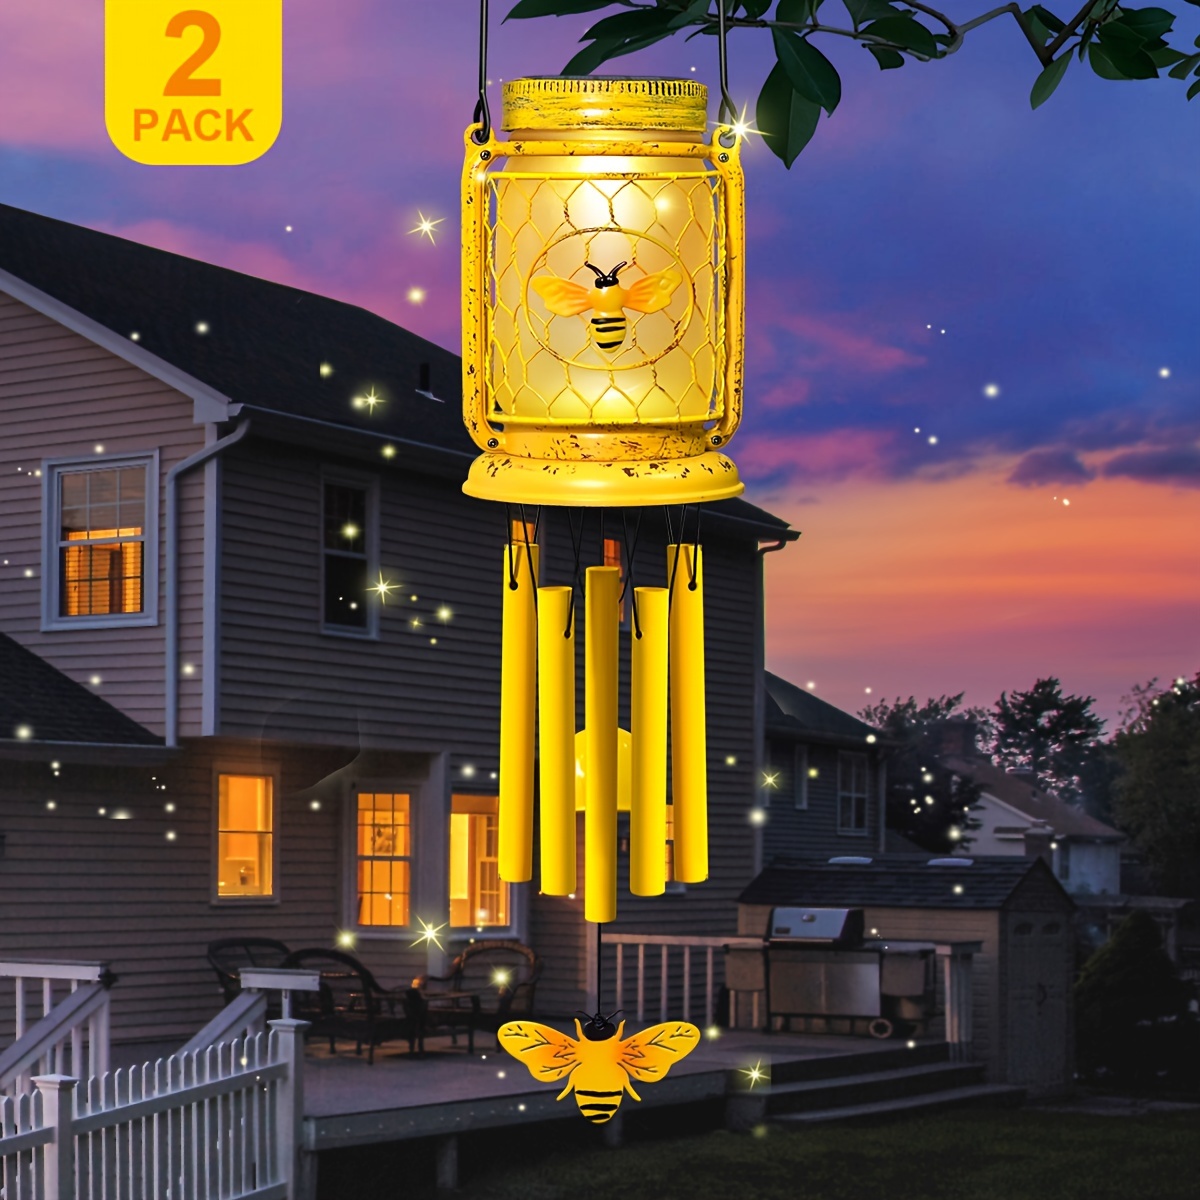 

2 Pack Solar-powered Honeybee Mason Jar Wind Chime Enchanting Garden Decor, Hang Solar Mason Jar Light Decor For Yard Garden Courtyard, And Christmas Atmosphere Lights